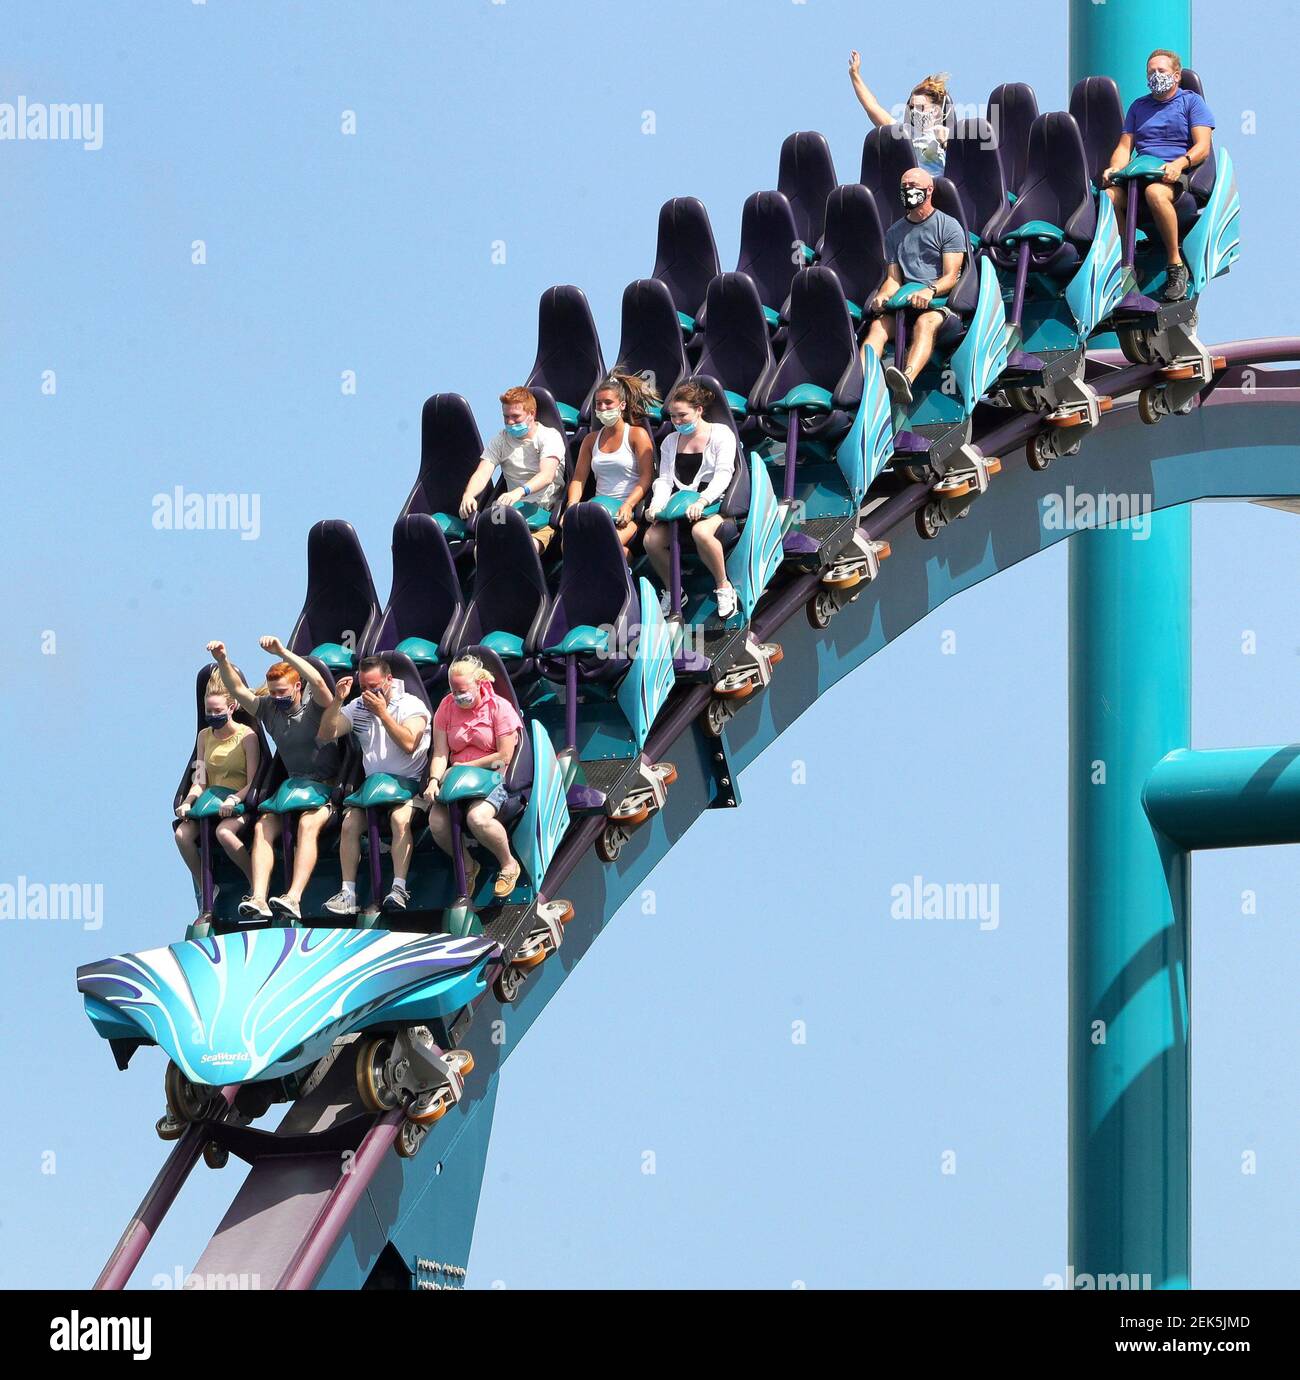 Orlando's Tallest Roller Coaster - SeaWorld's Mako